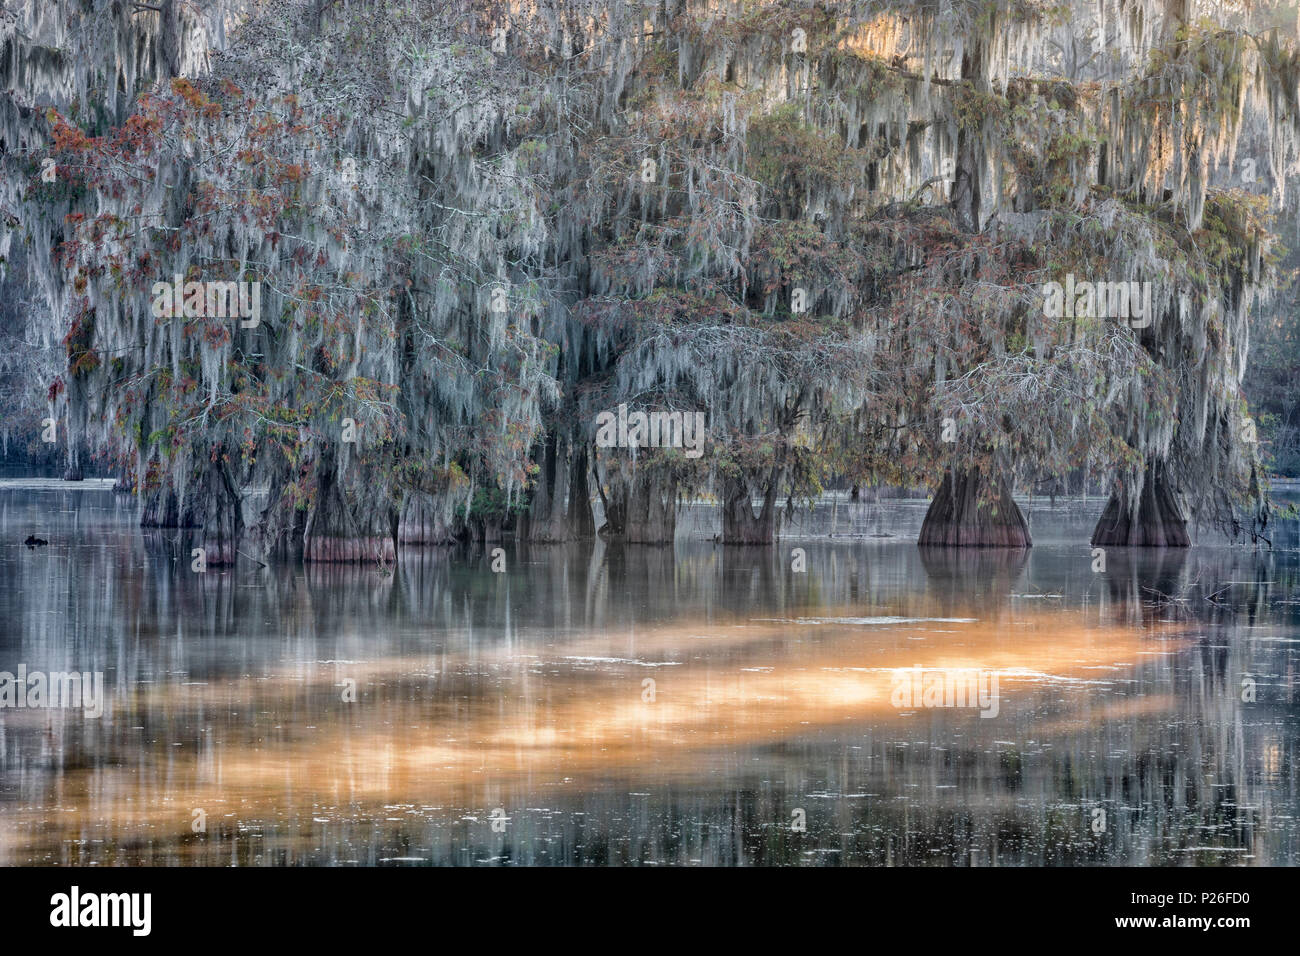 Taxodium distichum, Bald Cypress, Lake Martin, Atchafalaya Basin, Breaux Bridge, Louisiana, United States Stock Photo